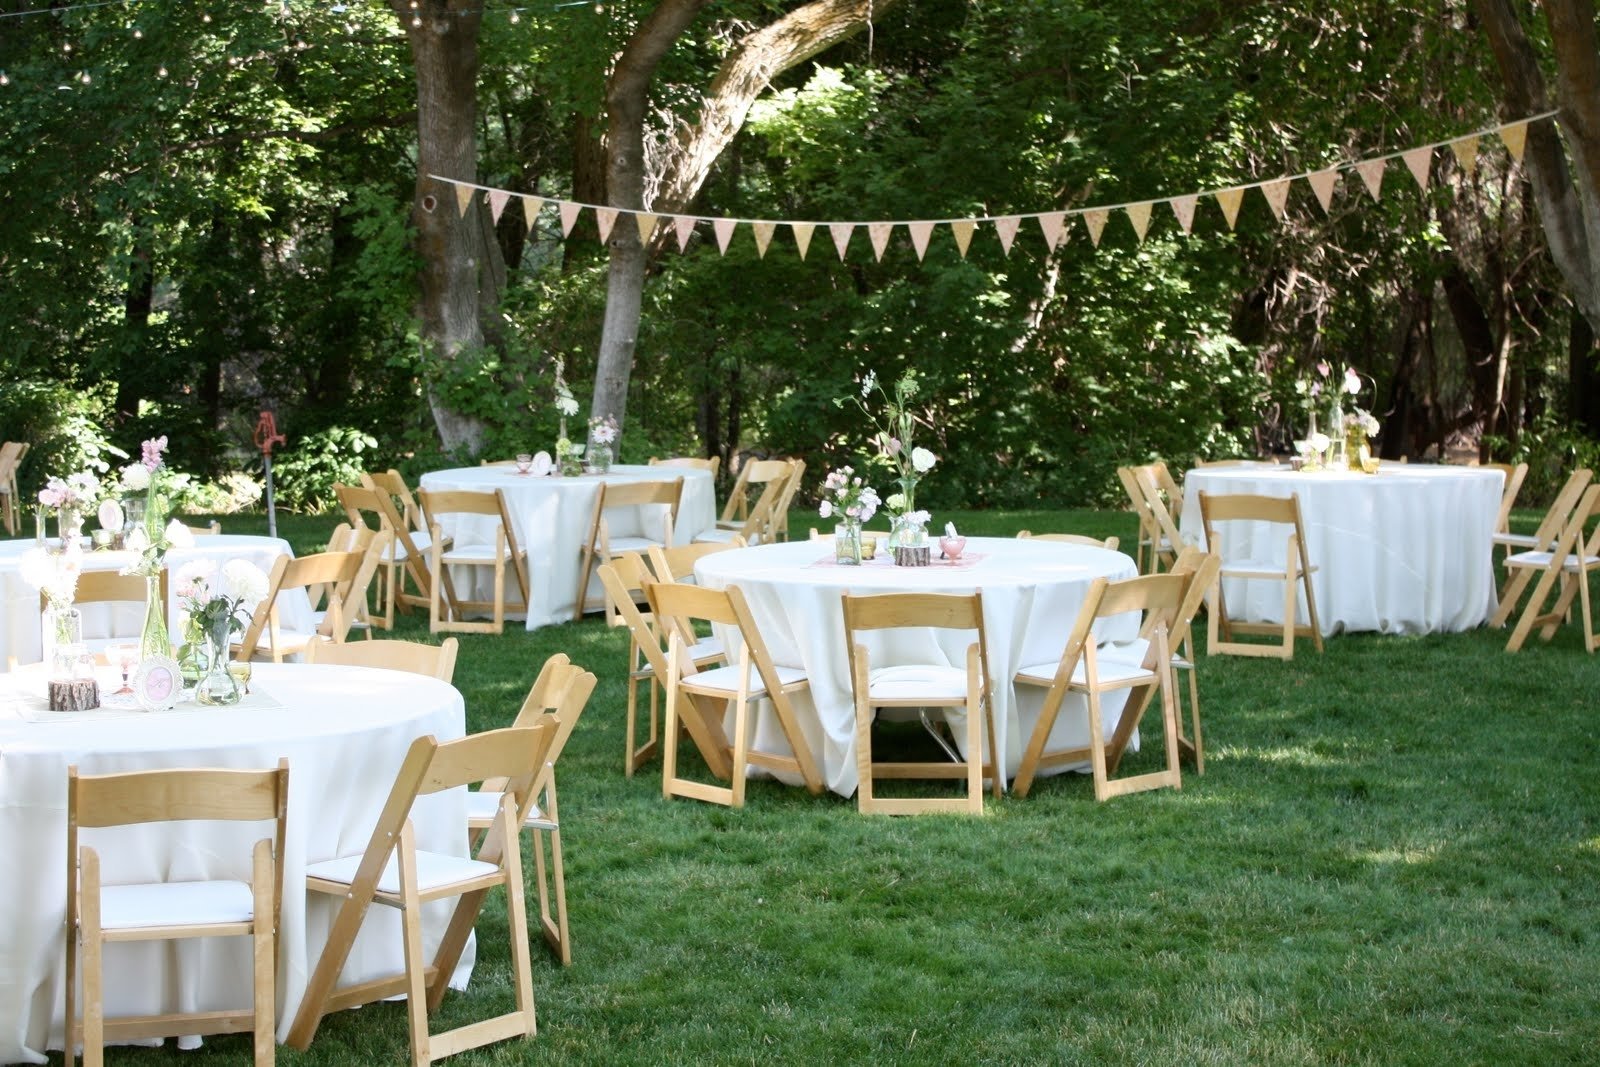 10 Unique Small Backyard Wedding Reception Ideas stunning outdoor small wedding venues planning a small backyard 2022